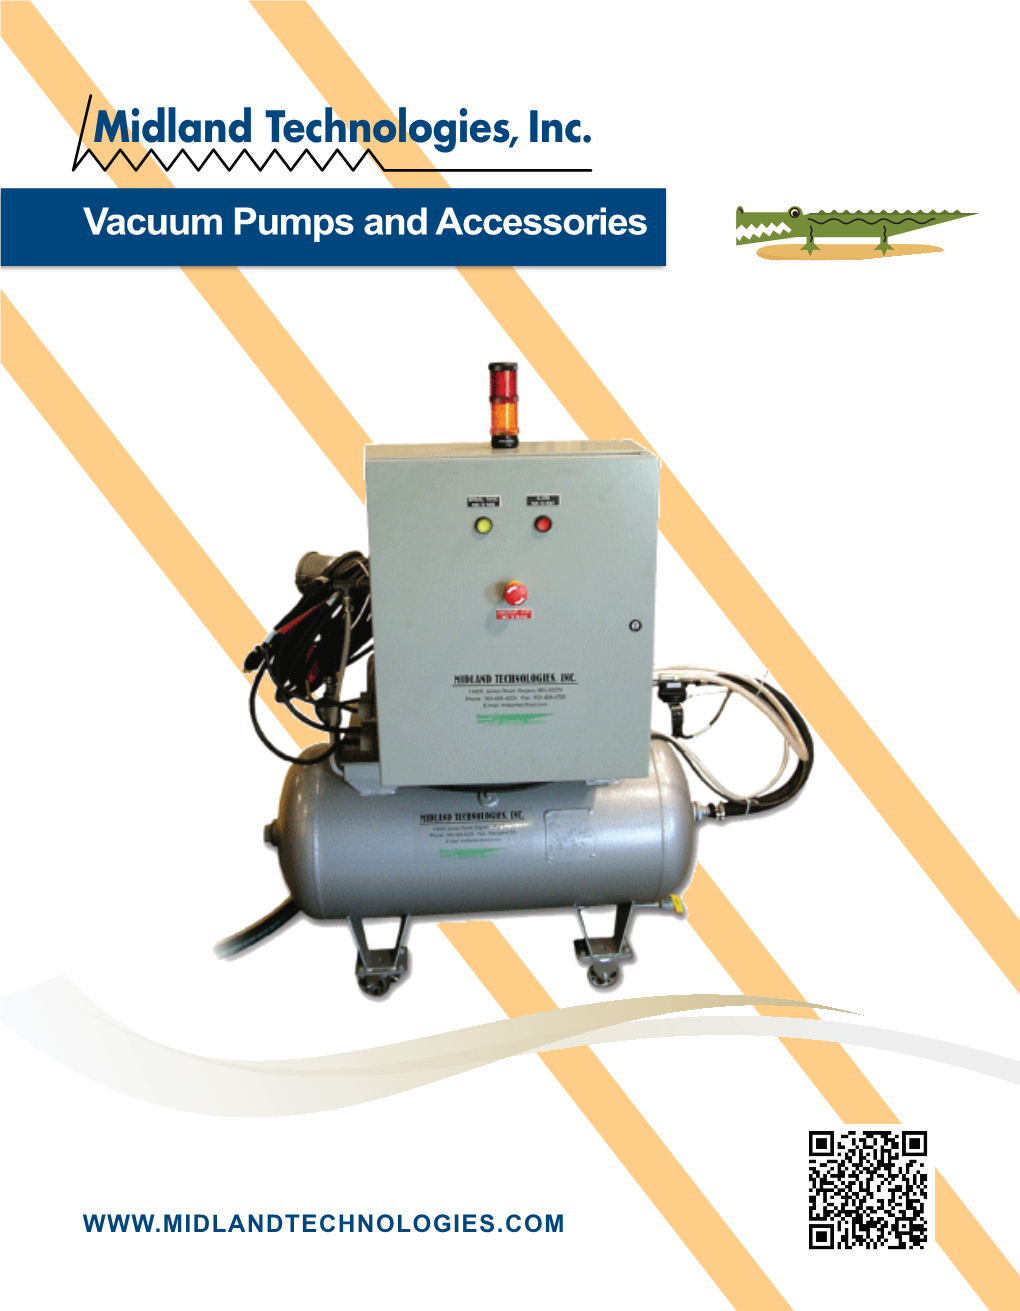 Vacuum Pumps and Accessories